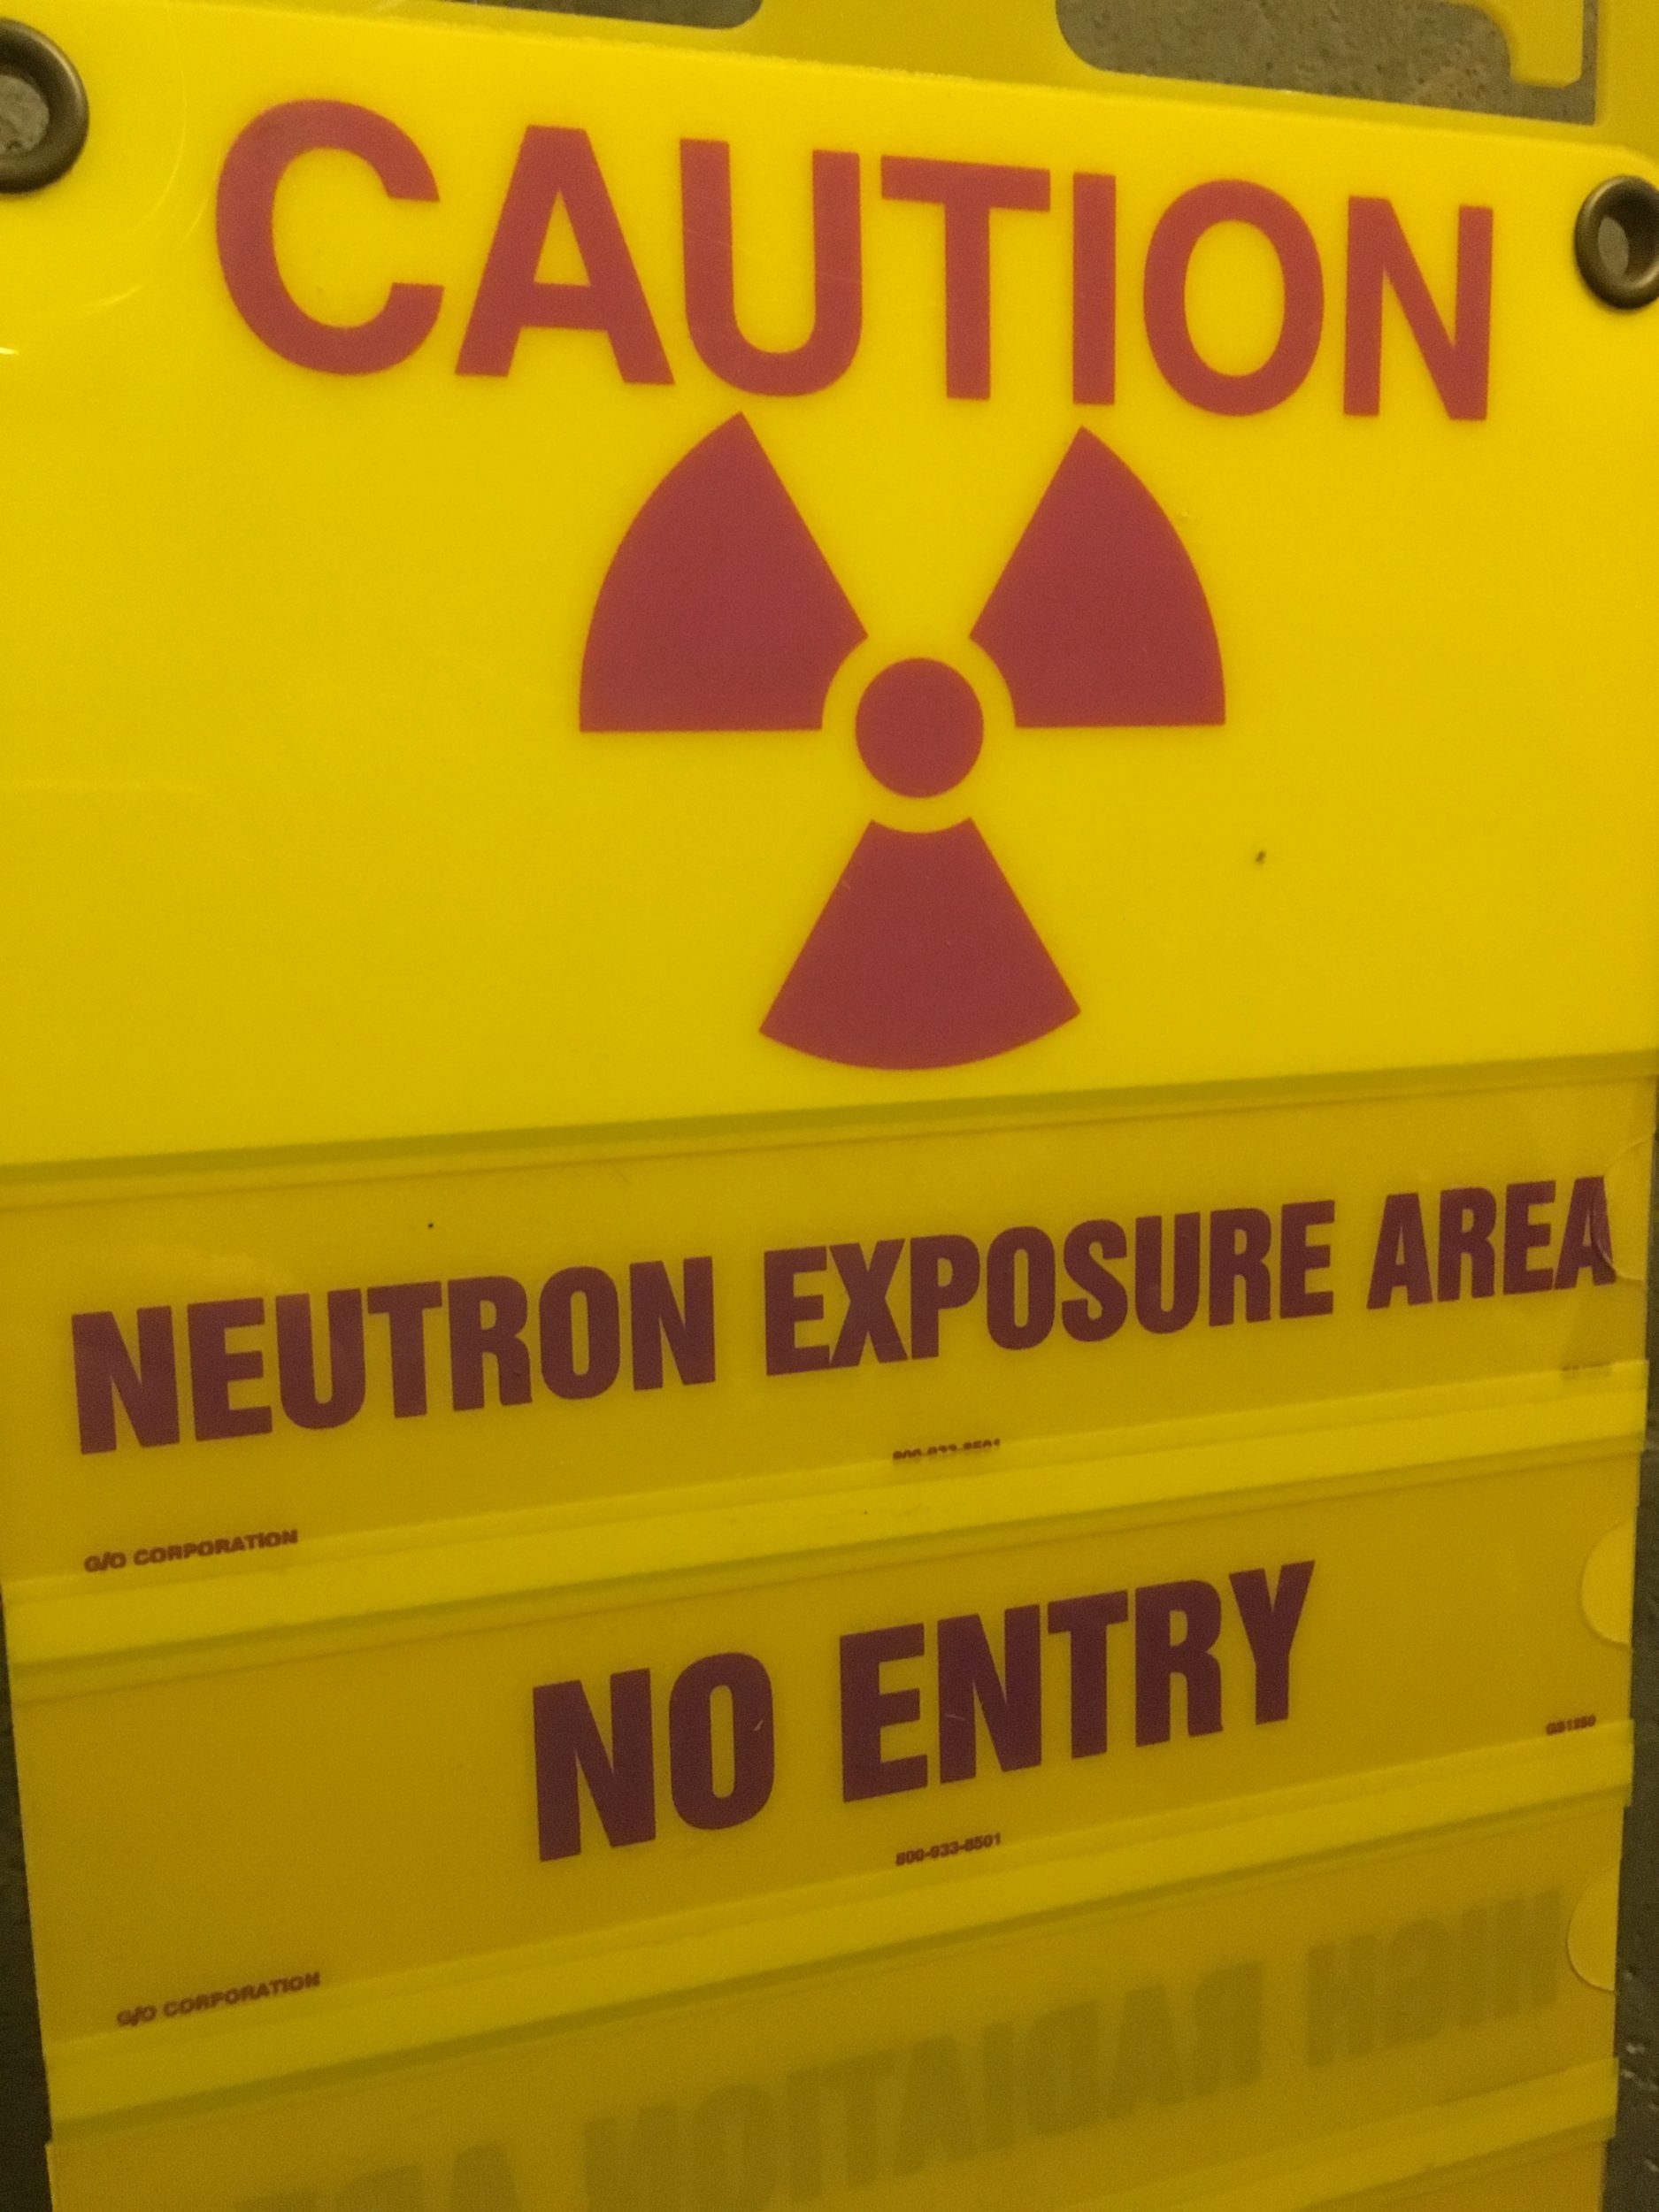 Neutrons